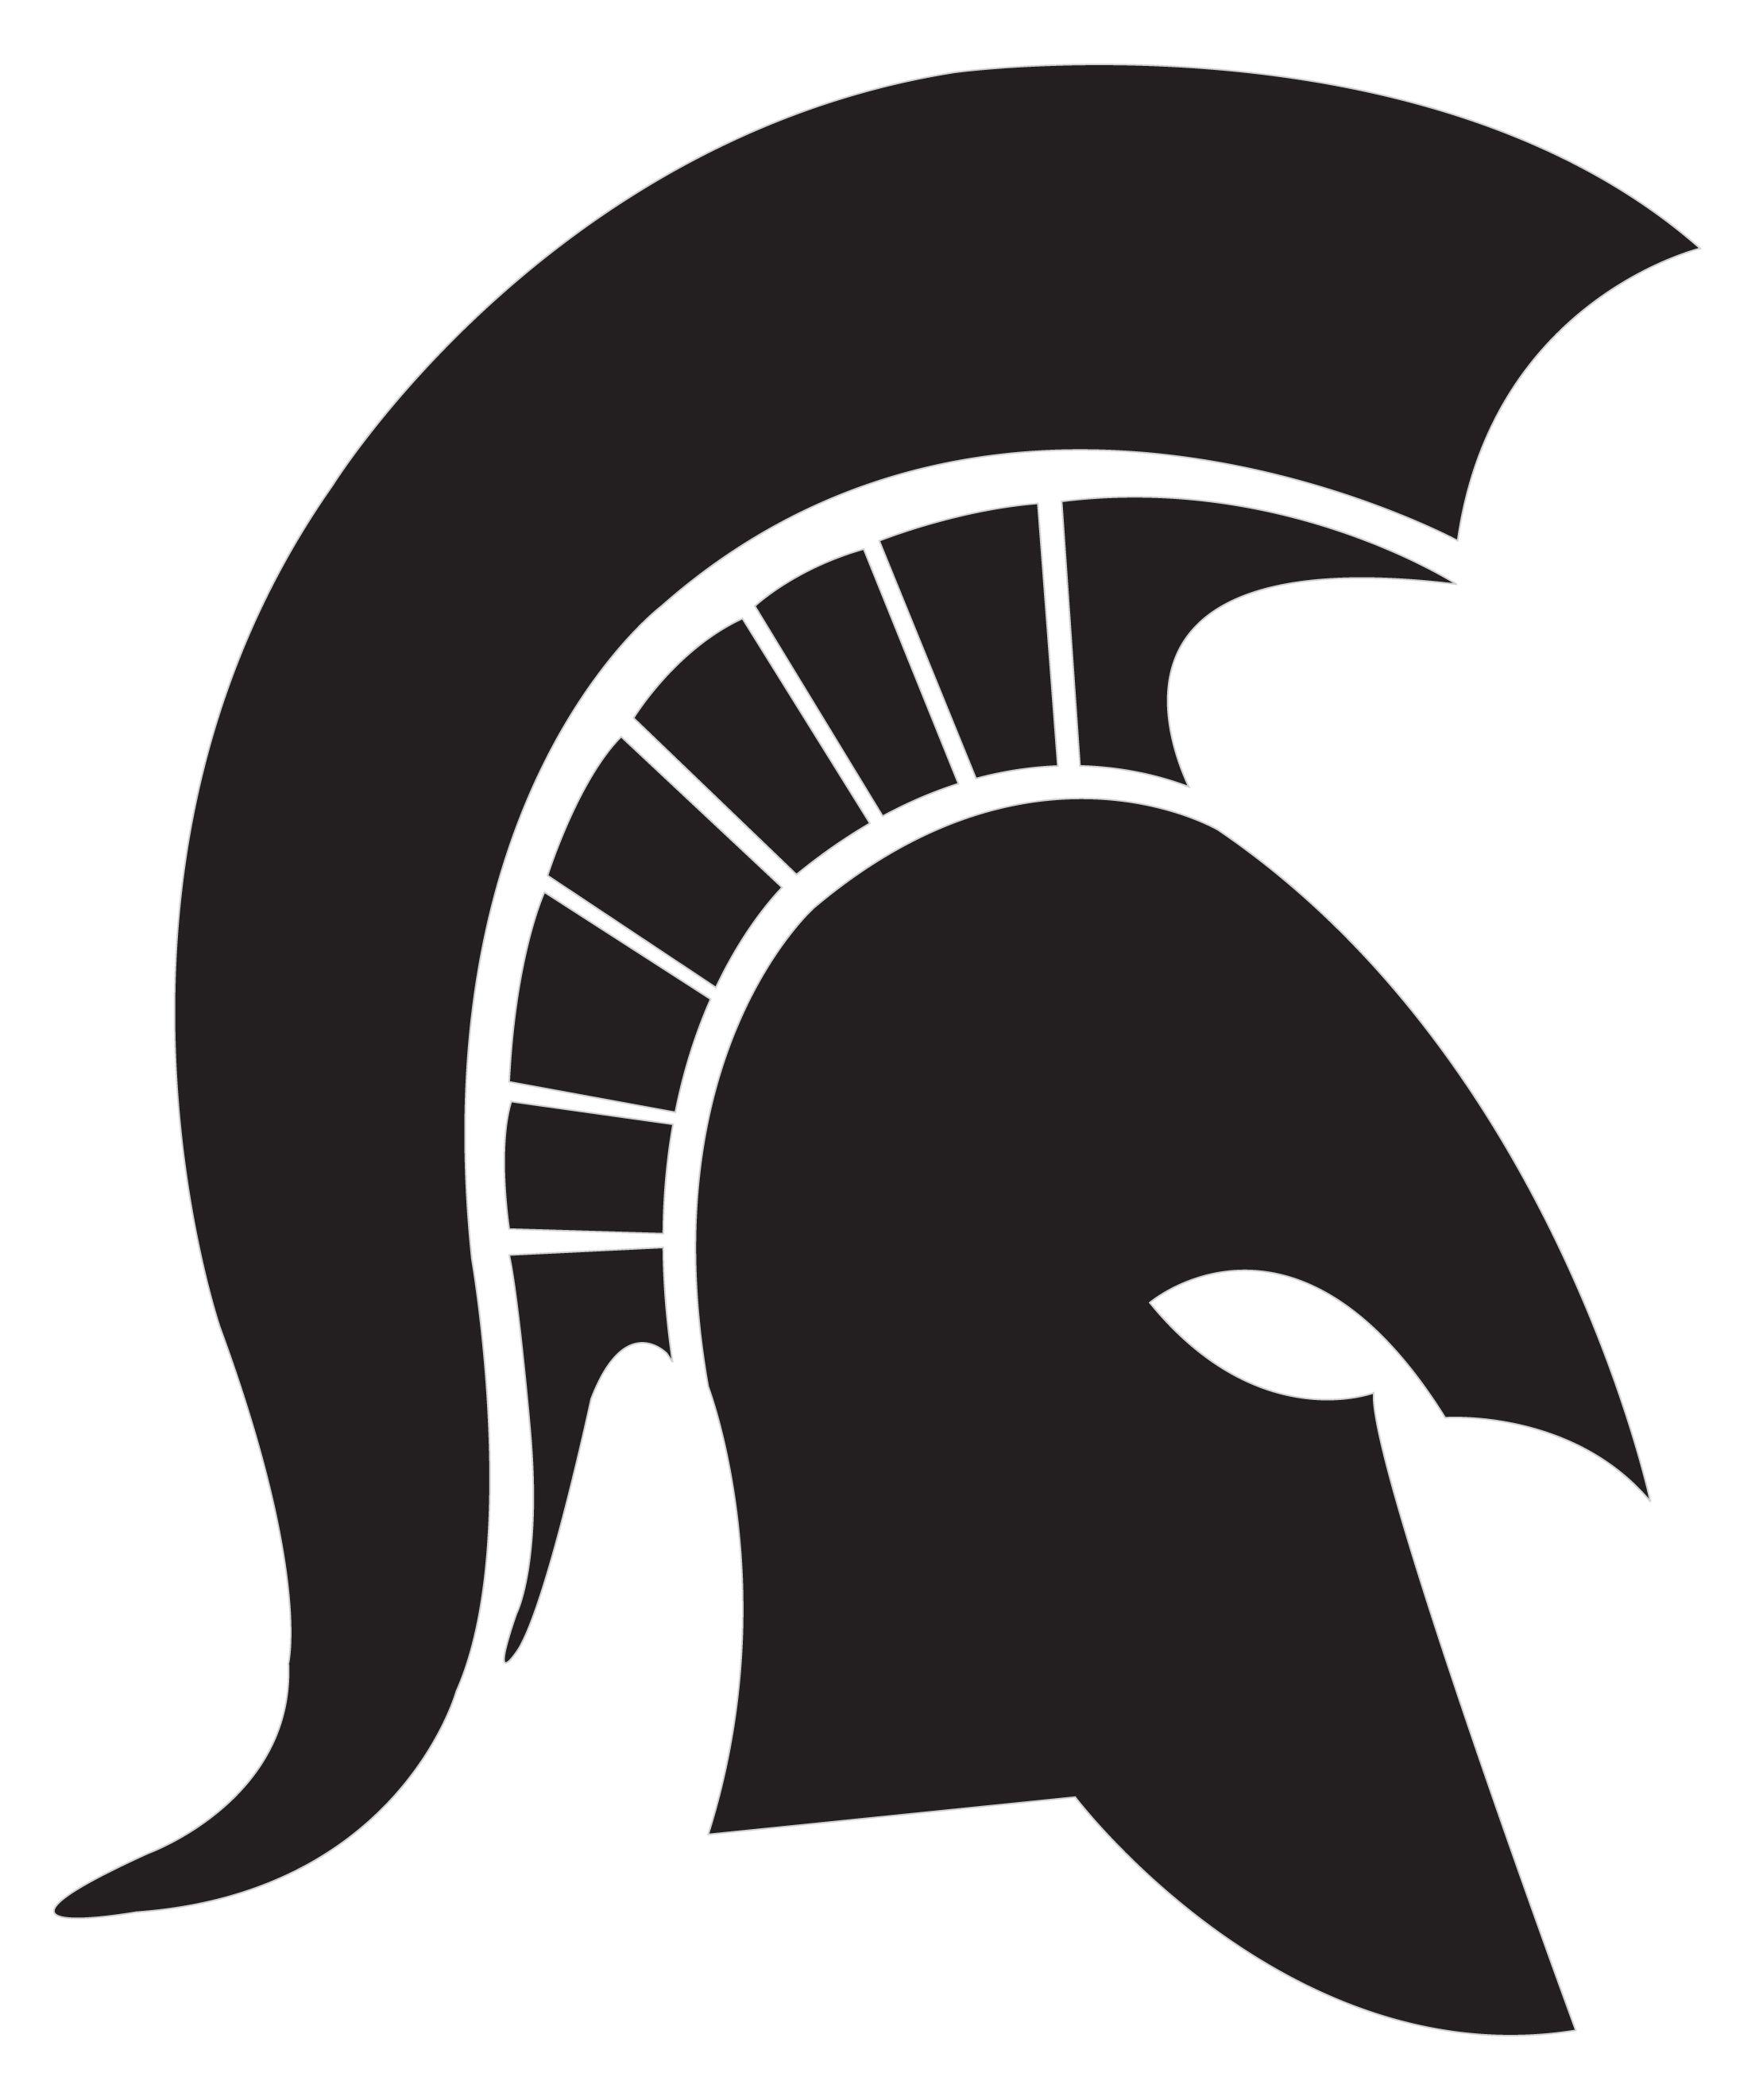 Black and White Spartan Logo - Free Spartan Helmet, Download Free Clip Art, Free Clip Art on ...